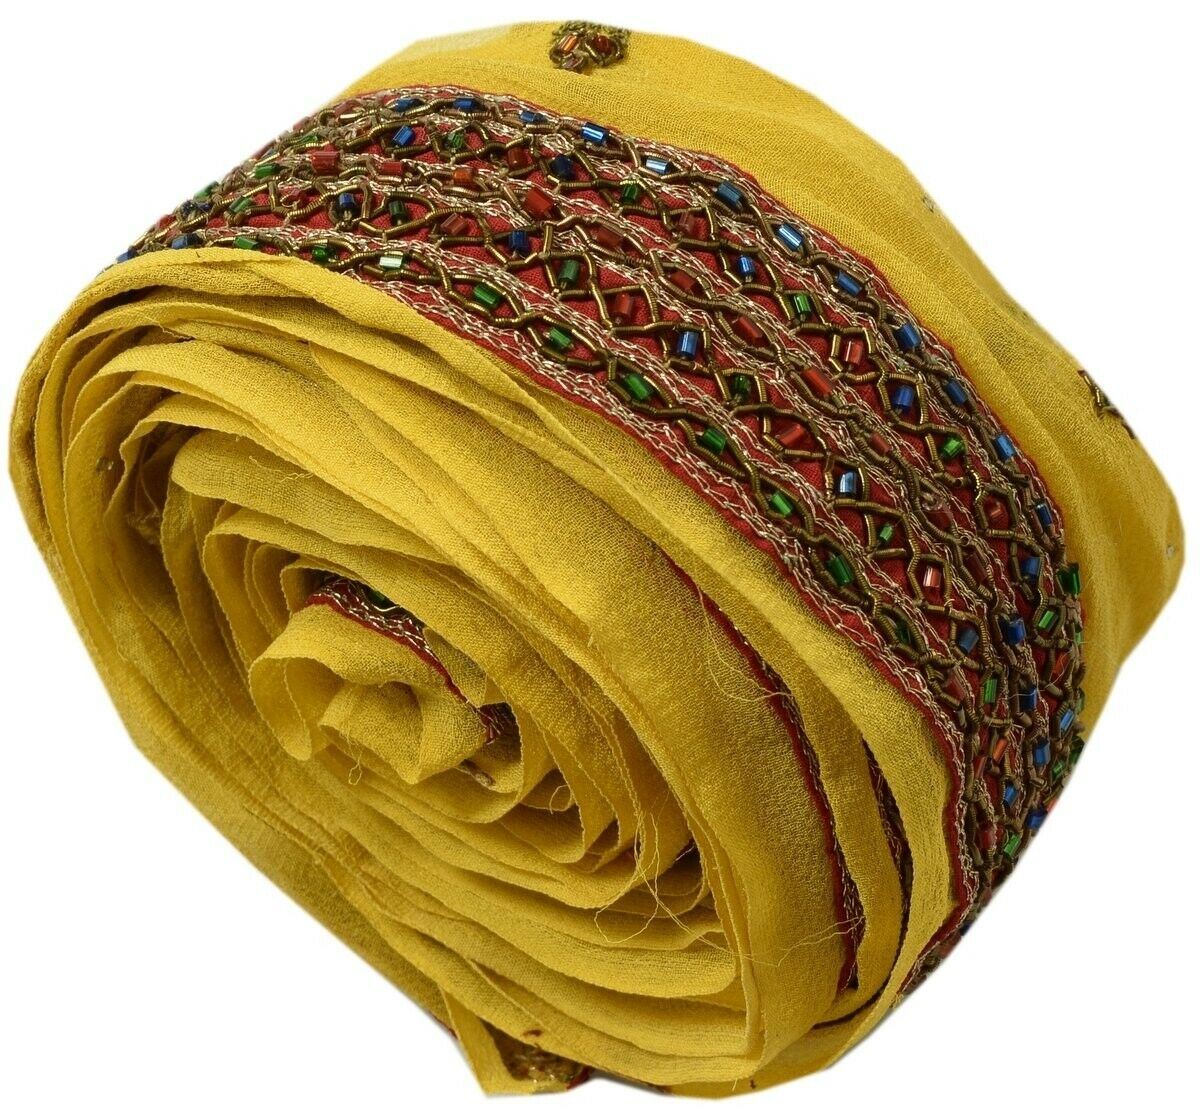 1.25" W Vintage Sari Border Indian Craft Trim Hand Beaded Maroon Ribbon Lace